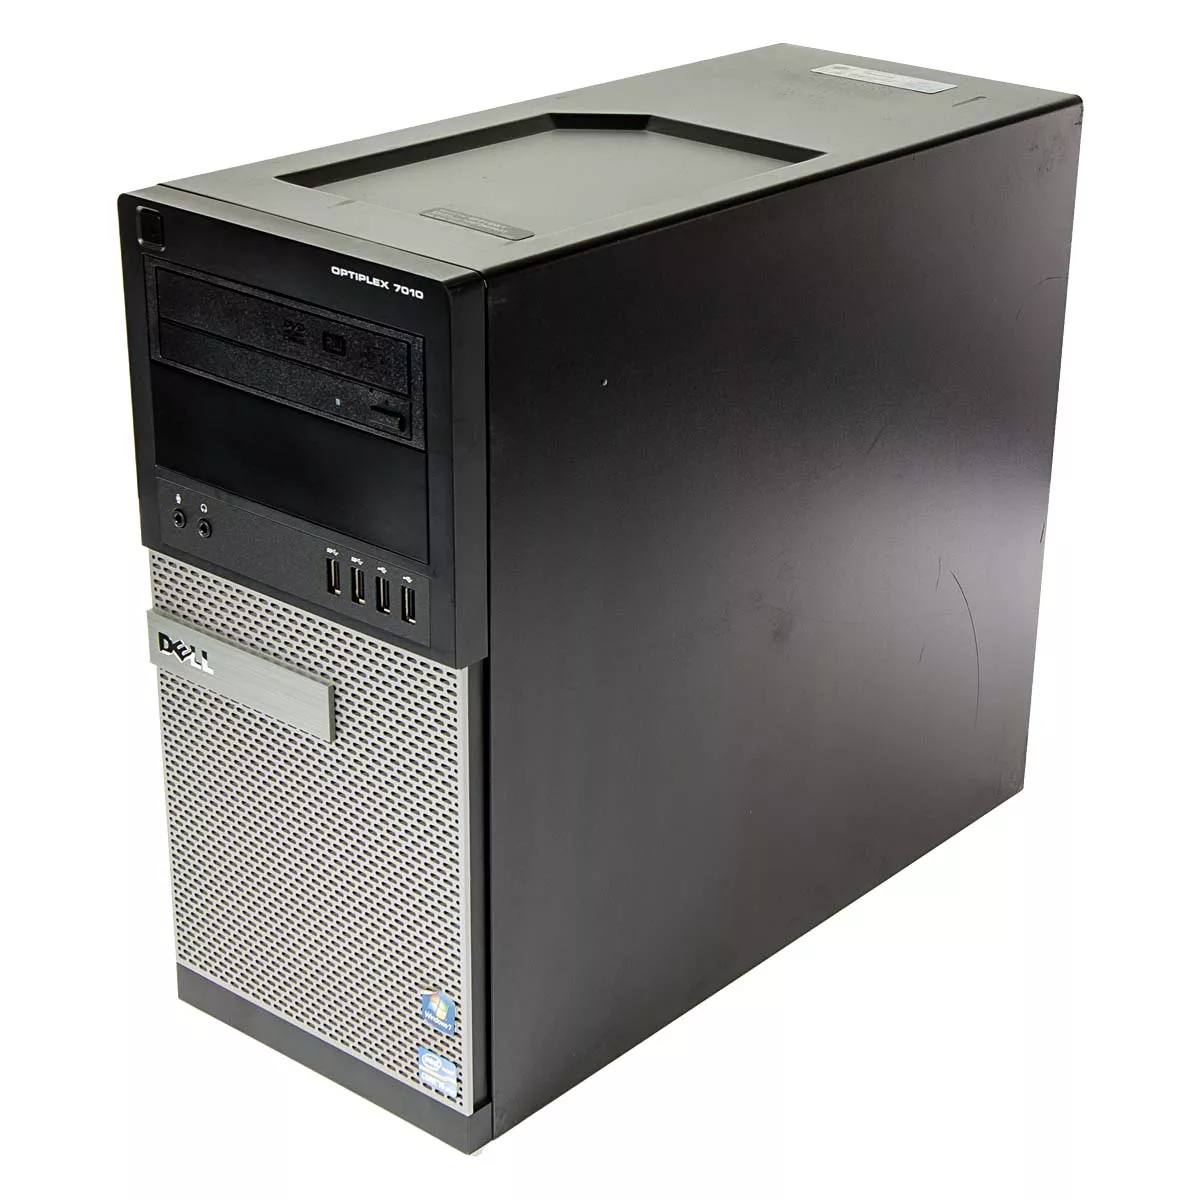 Dell Optiplex 9010 Tower Quad Core i5 3470 3,20 GHz 8 GB 500 GB A